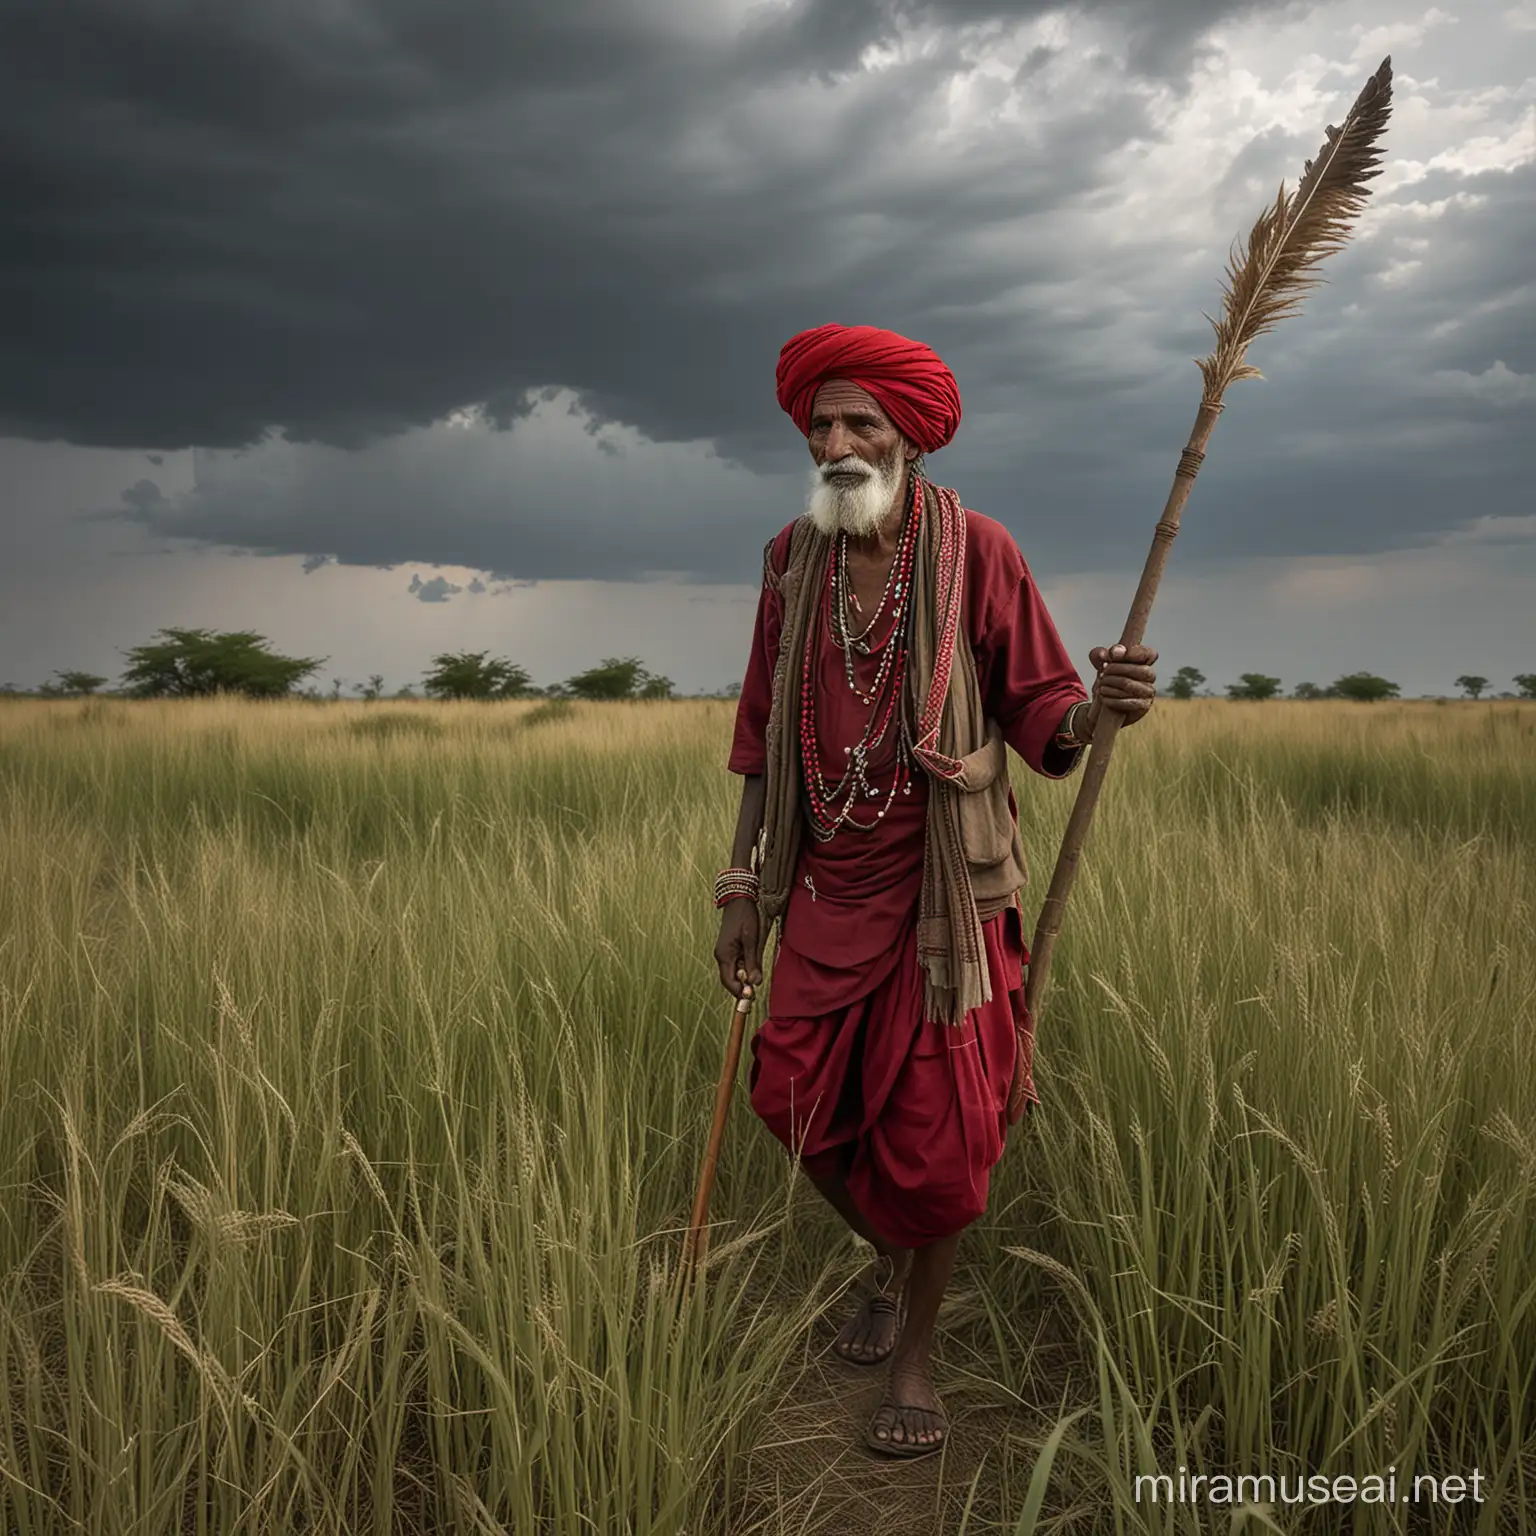 Elderly Rabari Shepherd in Rajasthan Grasslands with Eagle